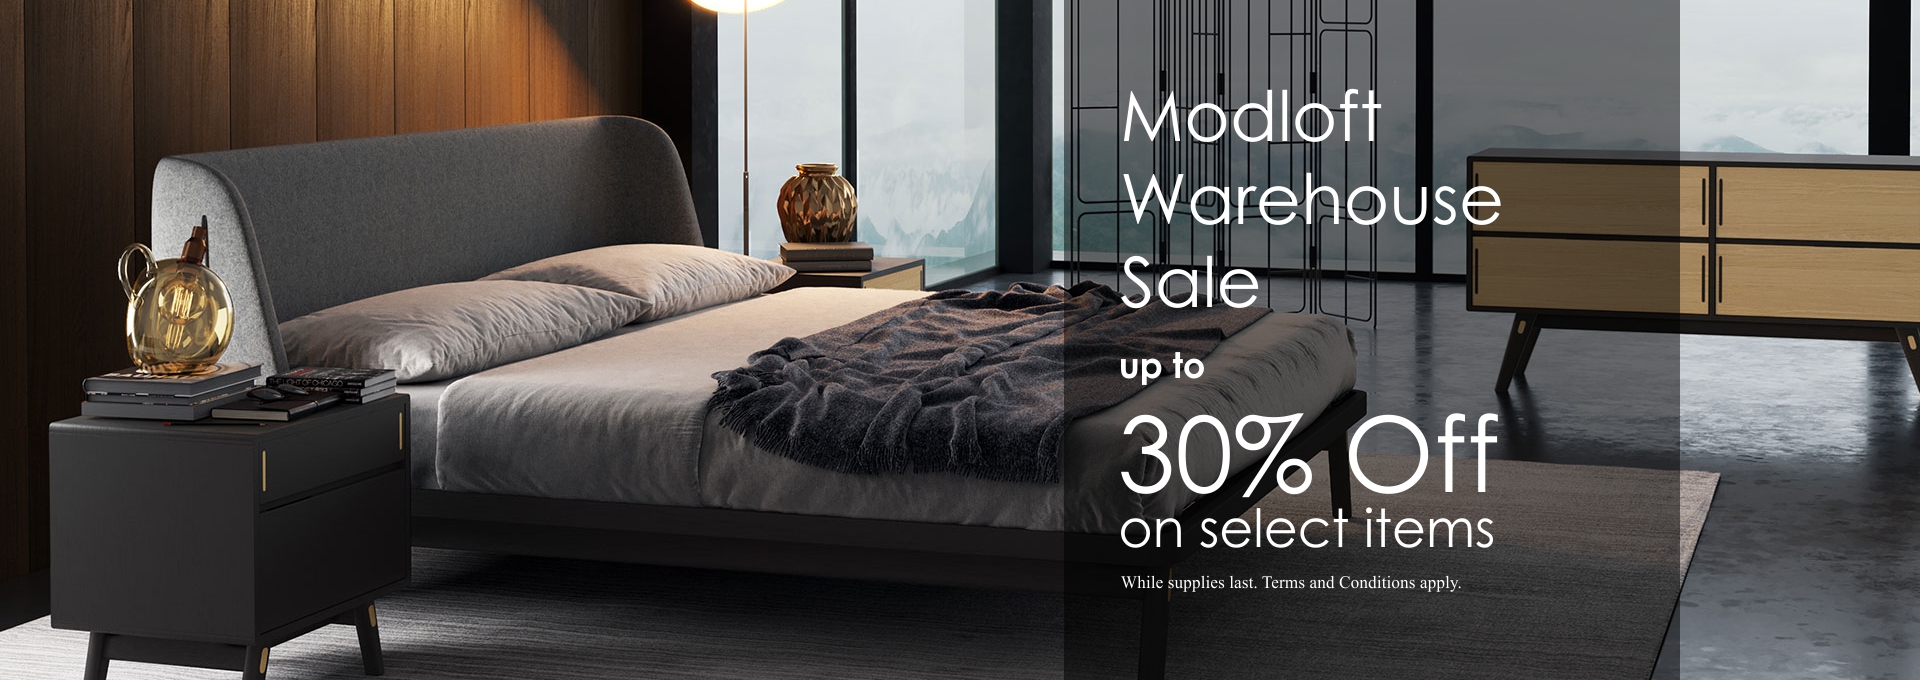 Modloft warehouse sale! Get up to 30% Off on select Modloft items.